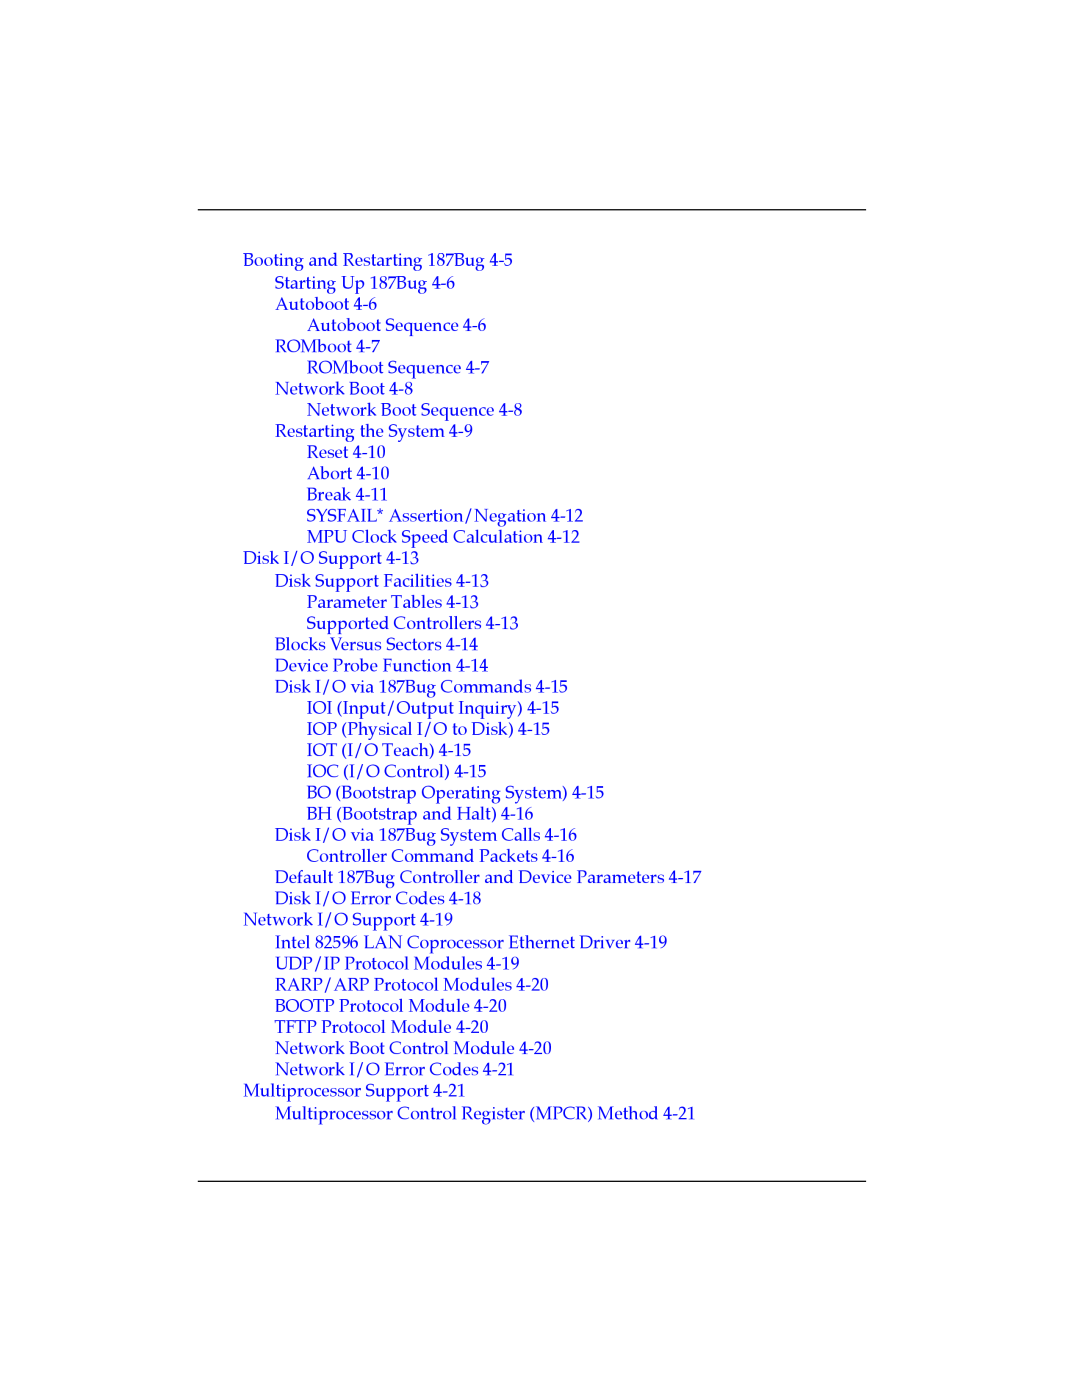 Motorola MVME187 manual Booting and Restarting 187Bug 4-5 Starting Up 187Bug 4-6 Autoboot, SYSFAIL* Assertion/Negation 